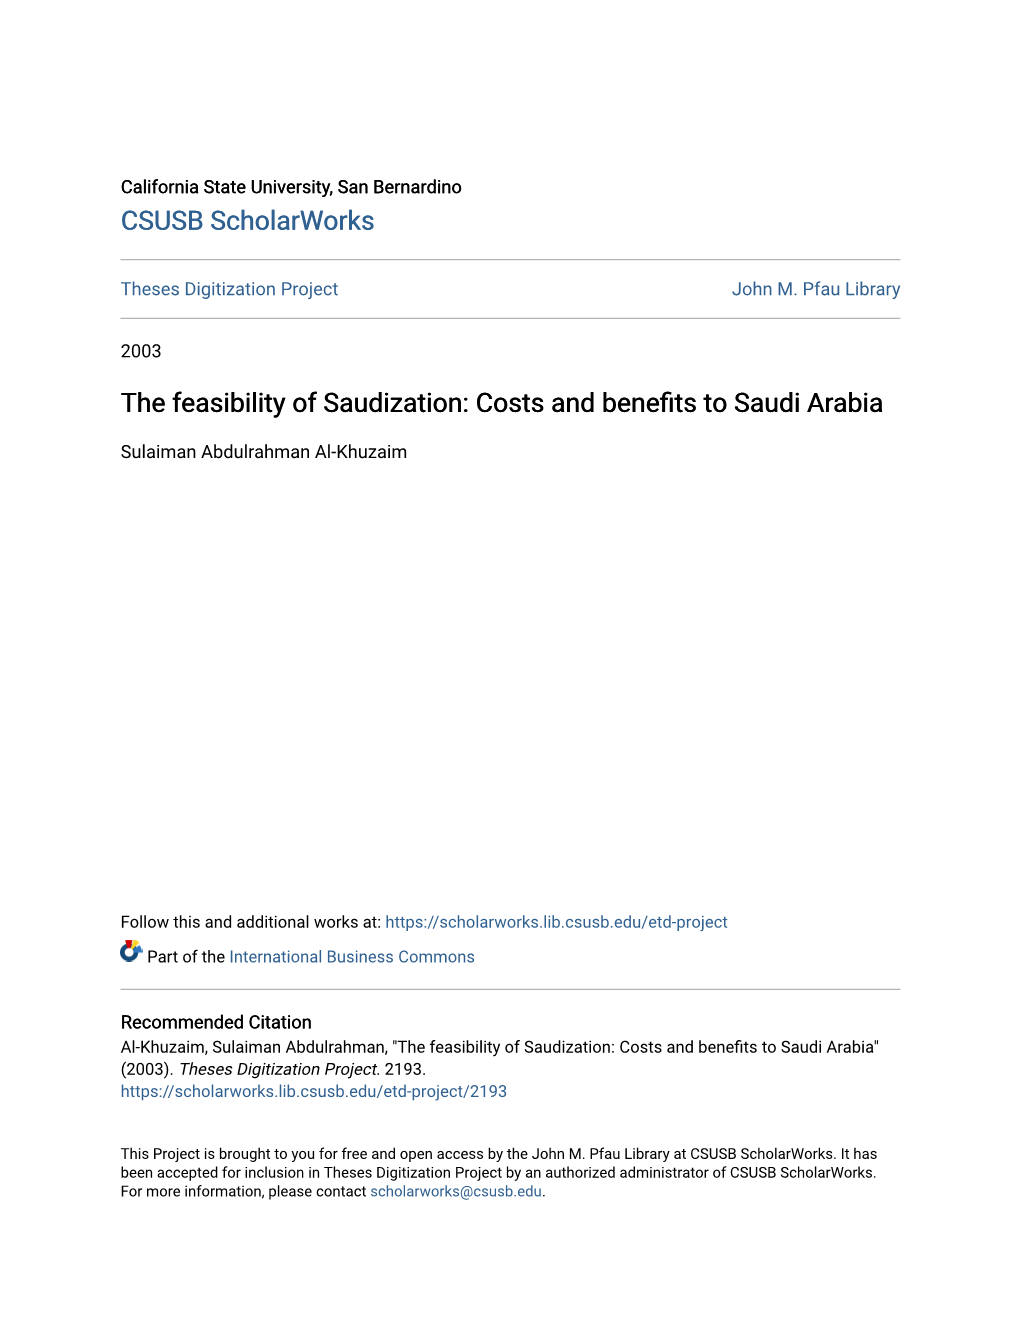 The Feasibility of Saudization: Costs and Benefits to Saudi Arabia